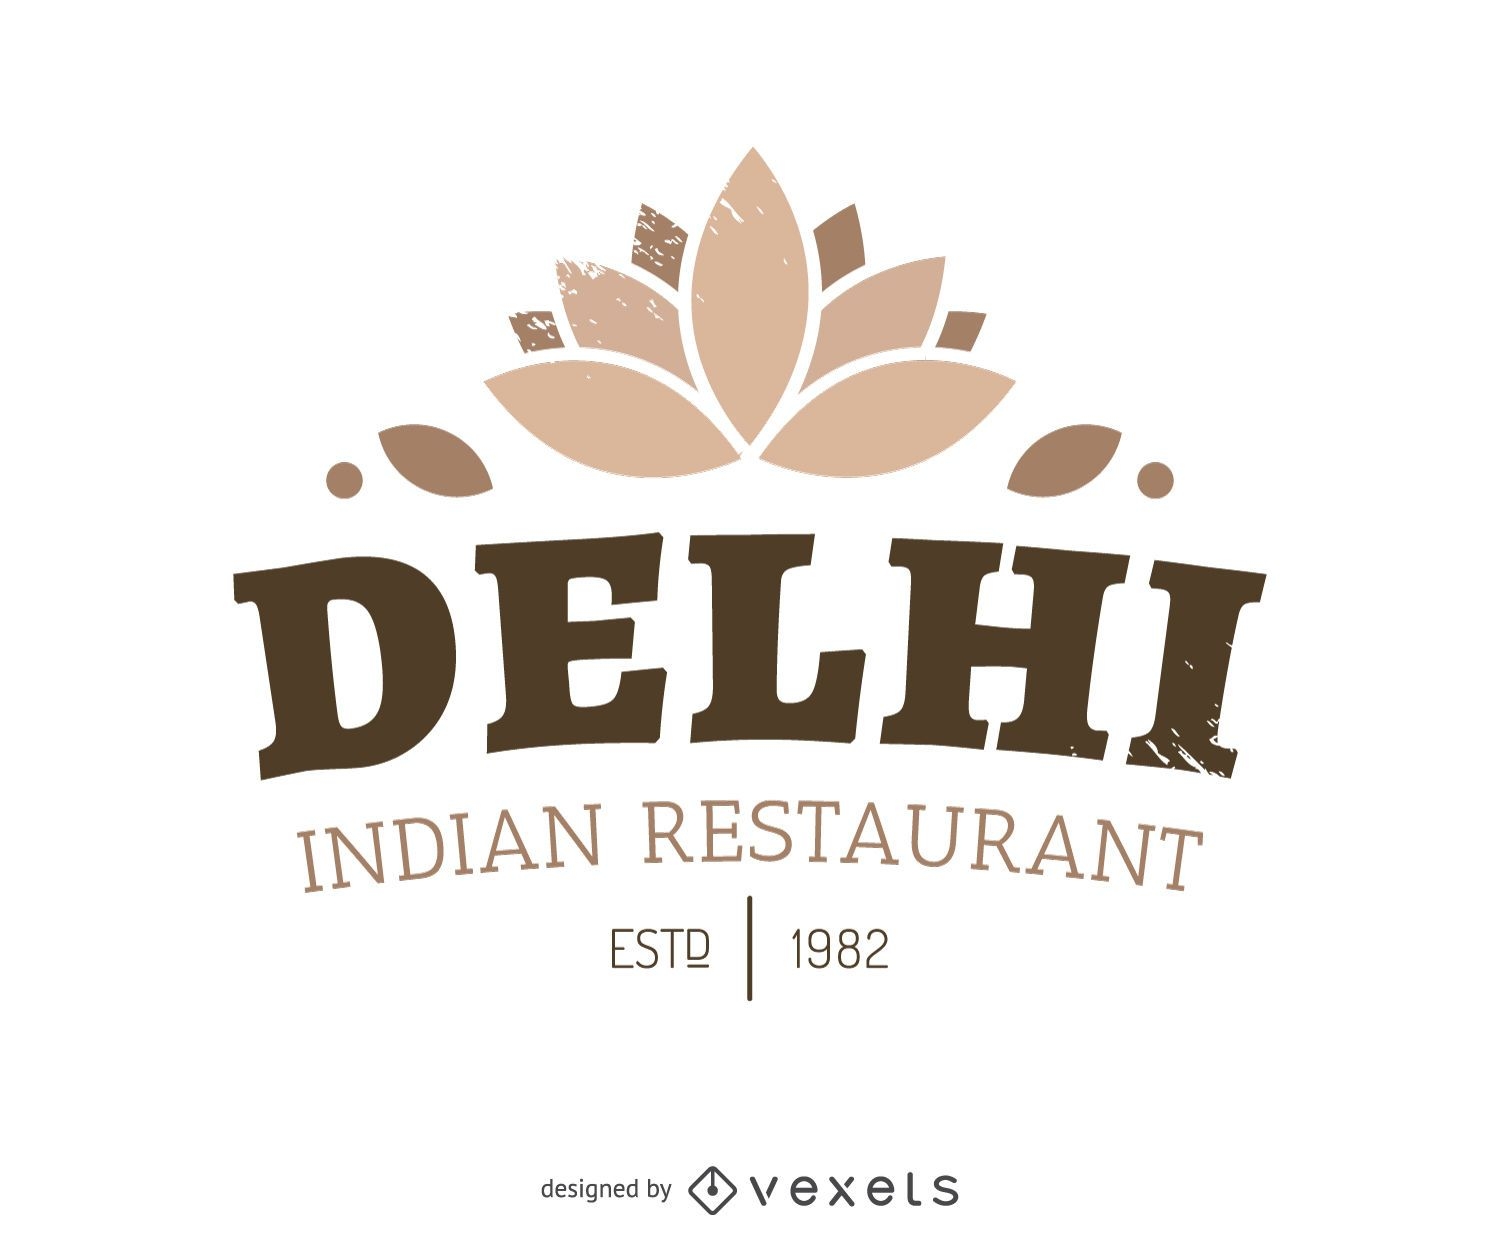 ornamental cloche for Indian restaurant | Logo Template by LogoDesign.net